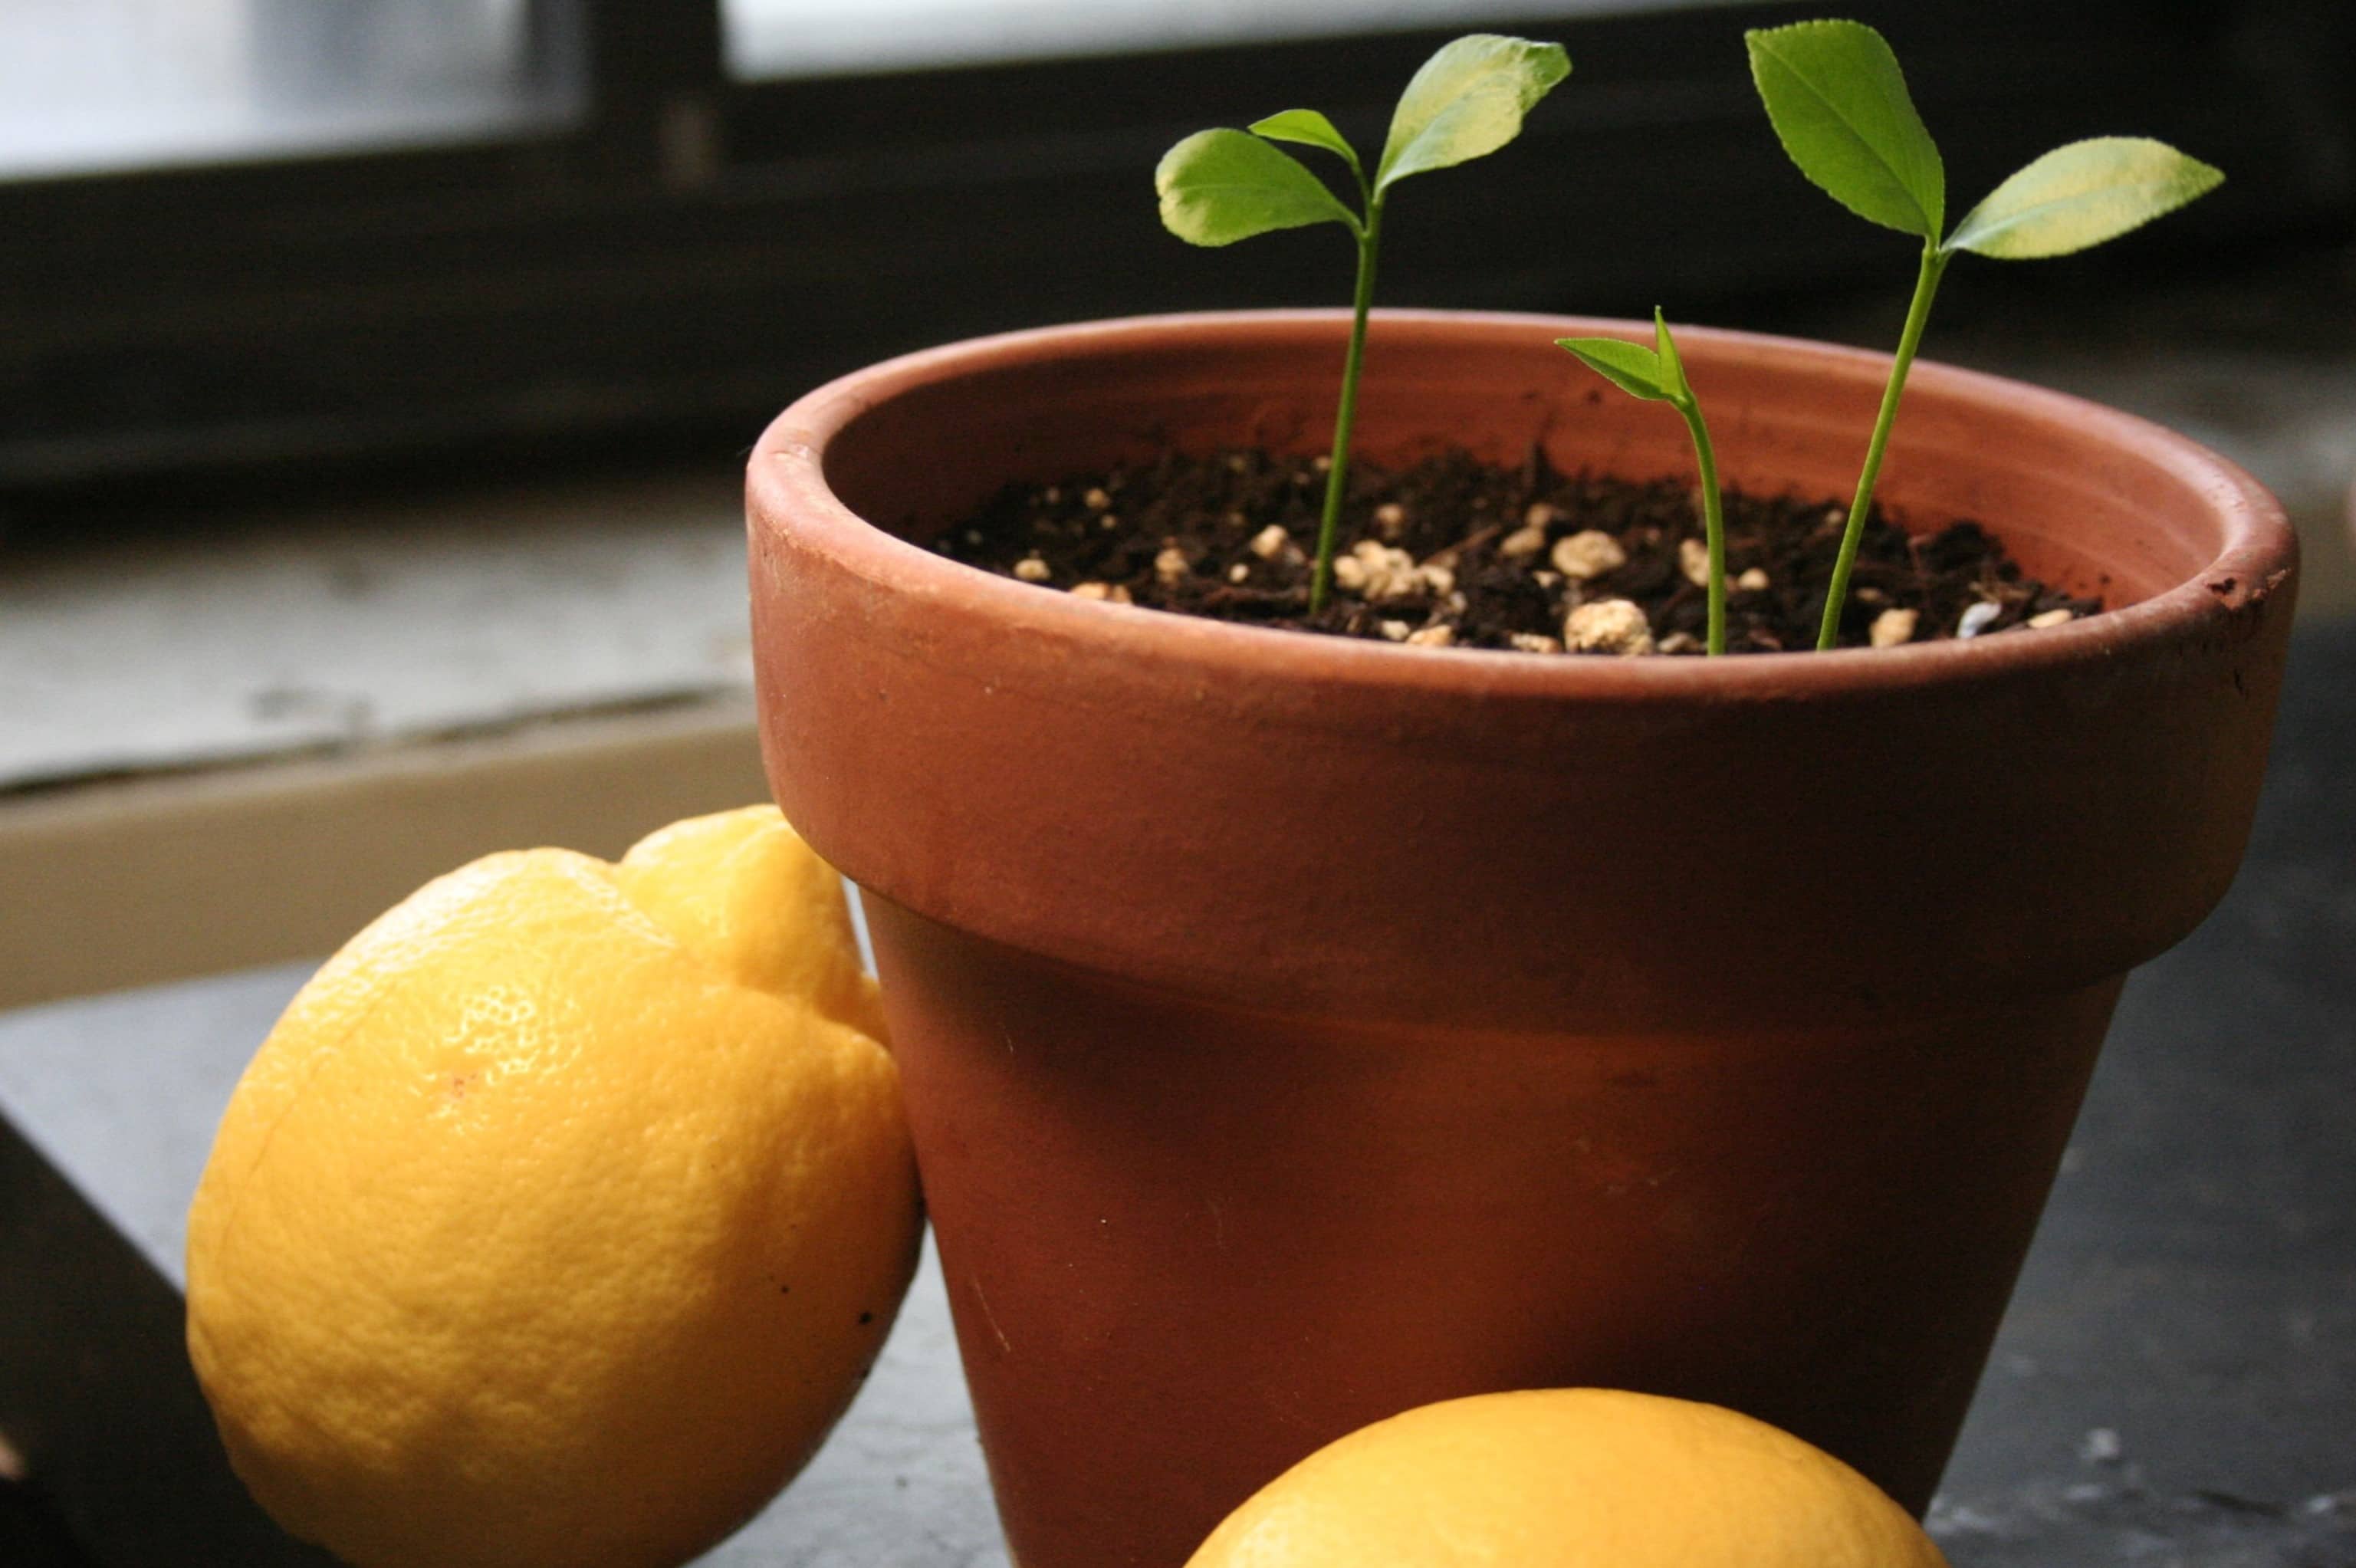 How To Grow Lemons From Lemon Seeds